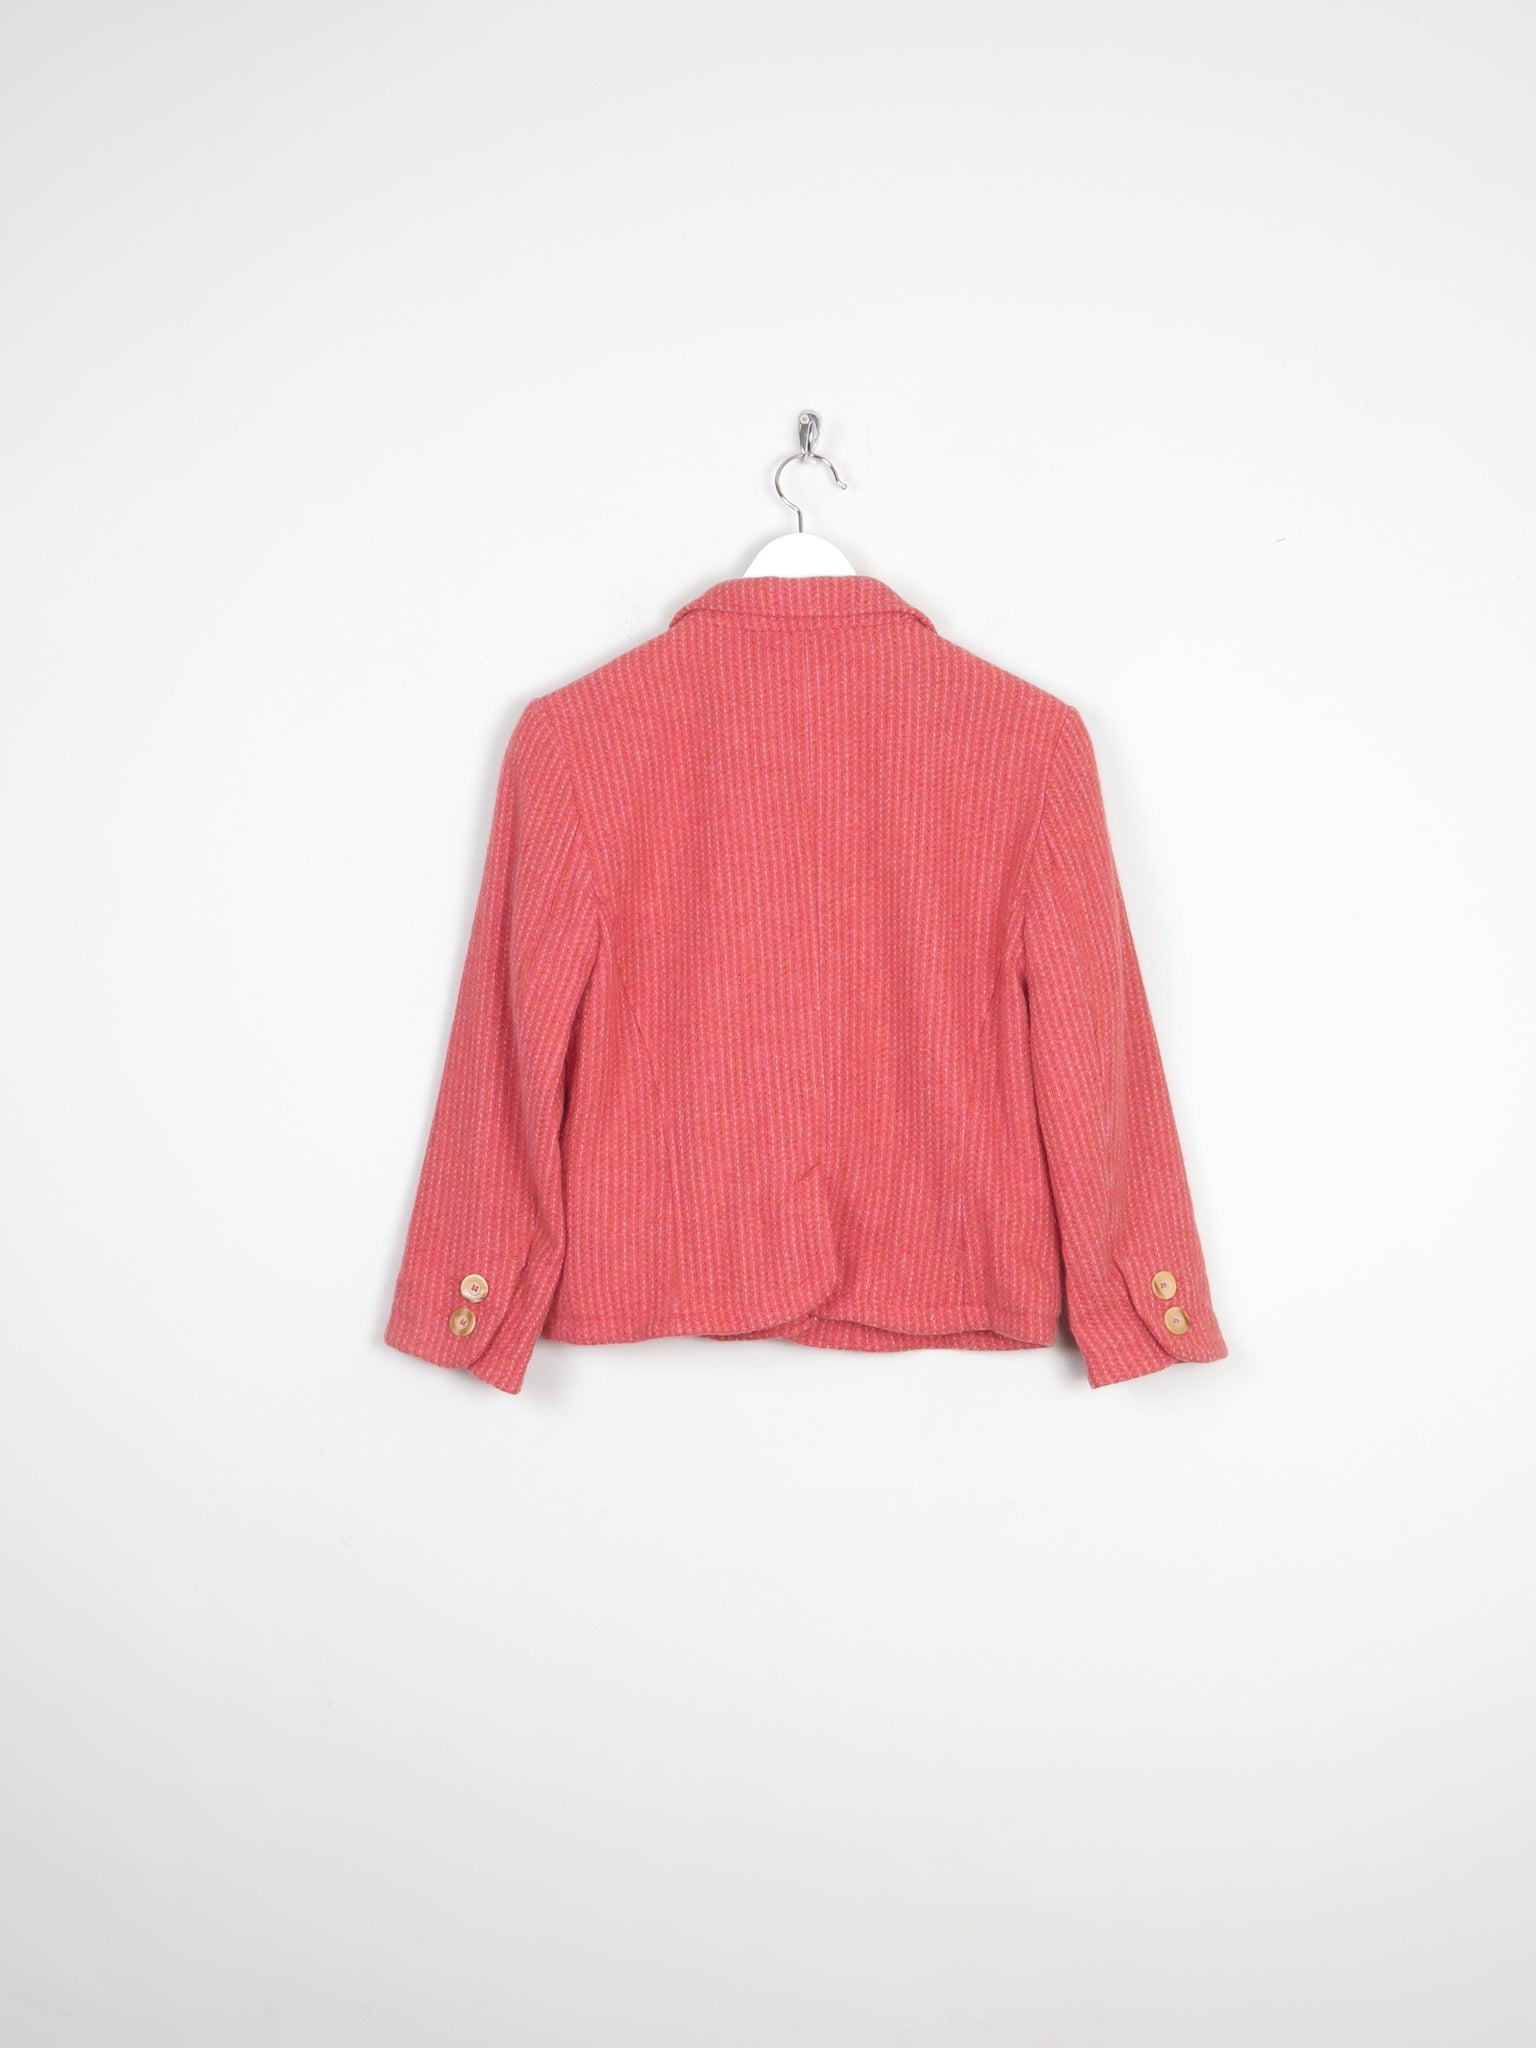 Women’s Pink Tweed Cropped Vintage Style Jacket S 8/10 - The Harlequin